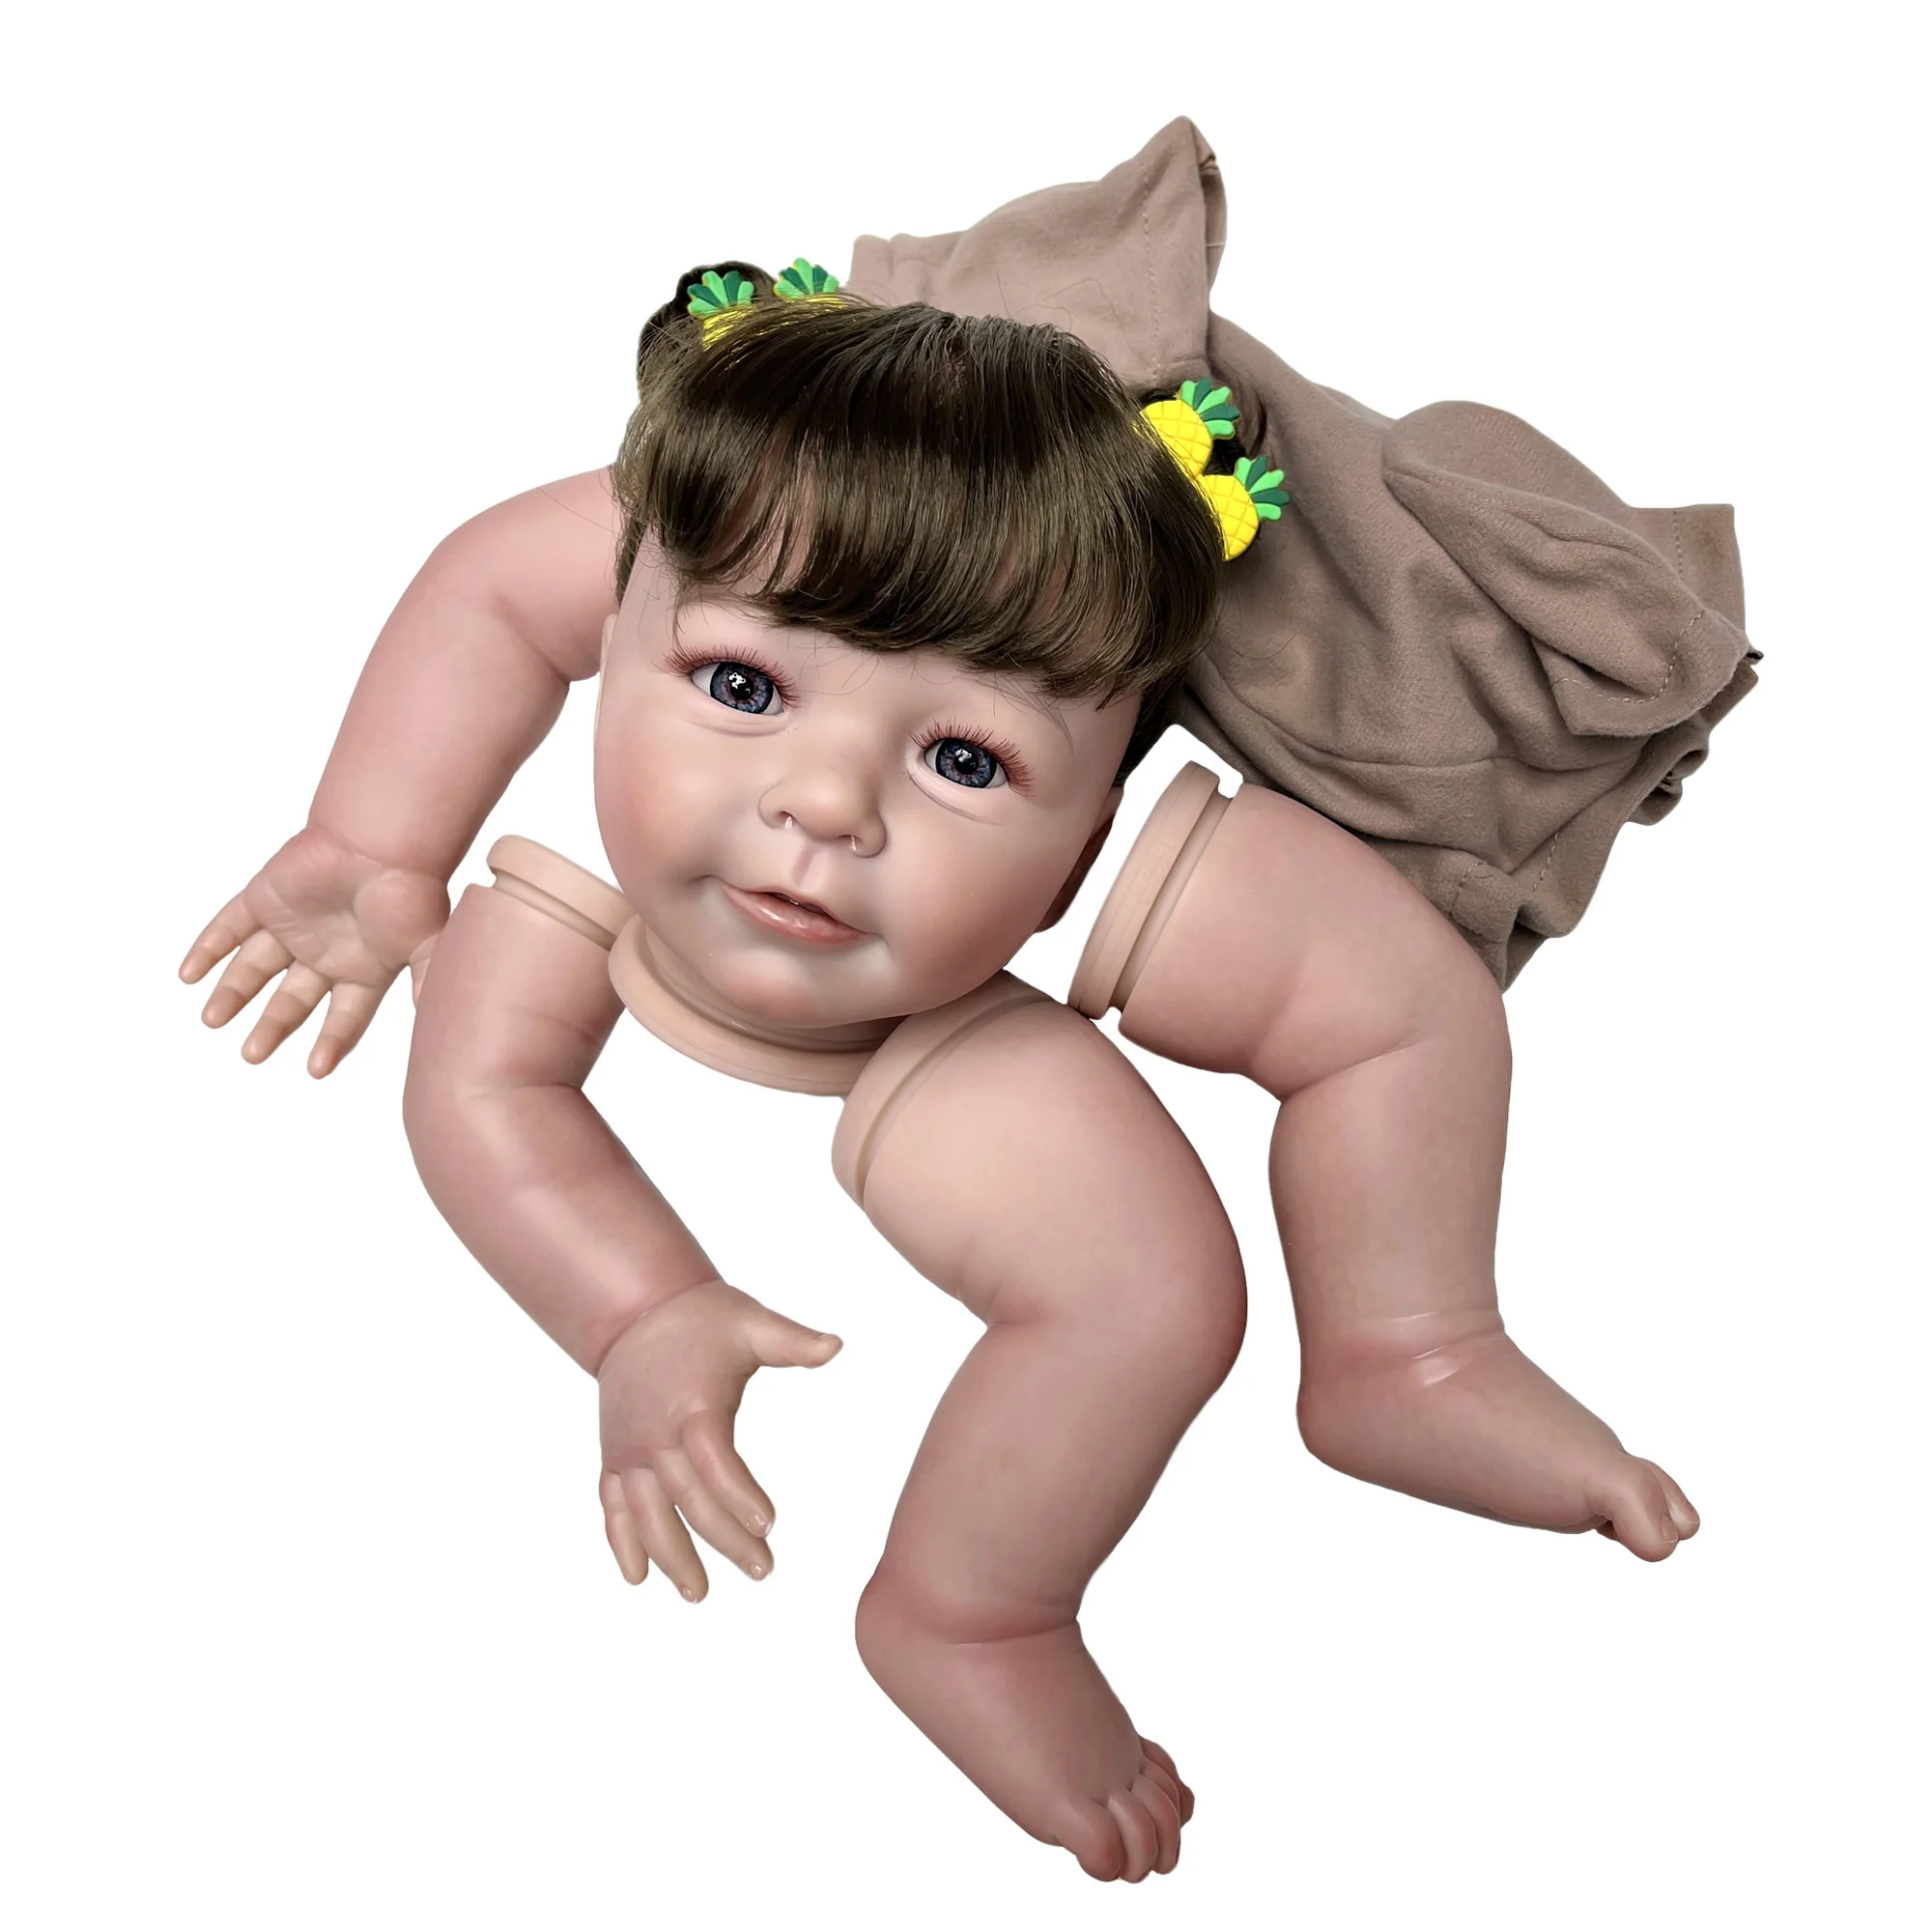 Bebê reborn realista atacado bebe reborn kуллы лдbonbonbonbonbonbonbonbe  boneca bebe renascer 20 Polegada bebê recém-nascido pintado boneca bonito -  AliExpress